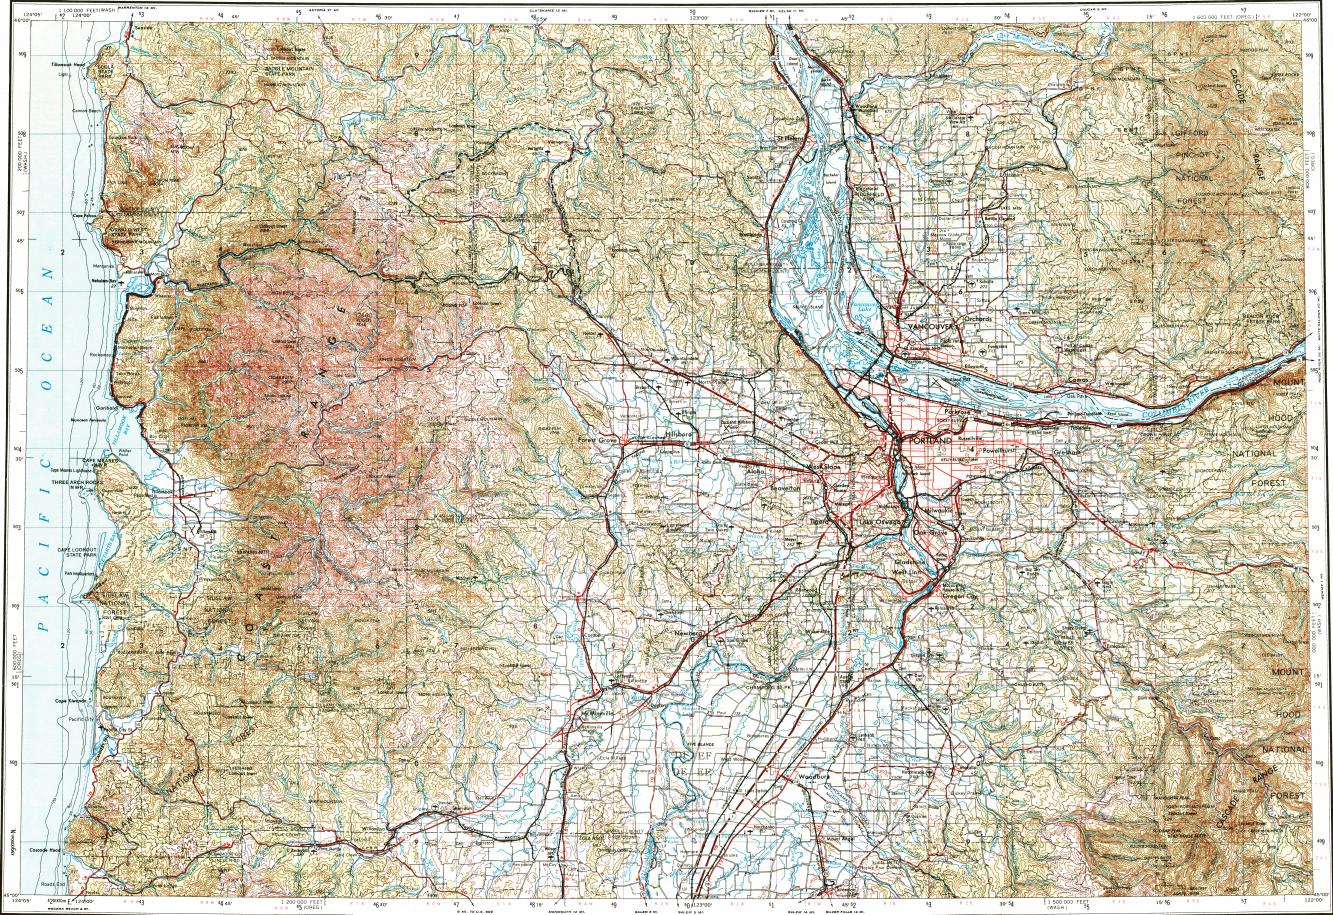 Download Topographic Map In Area Of Portland Beaverton Gresham